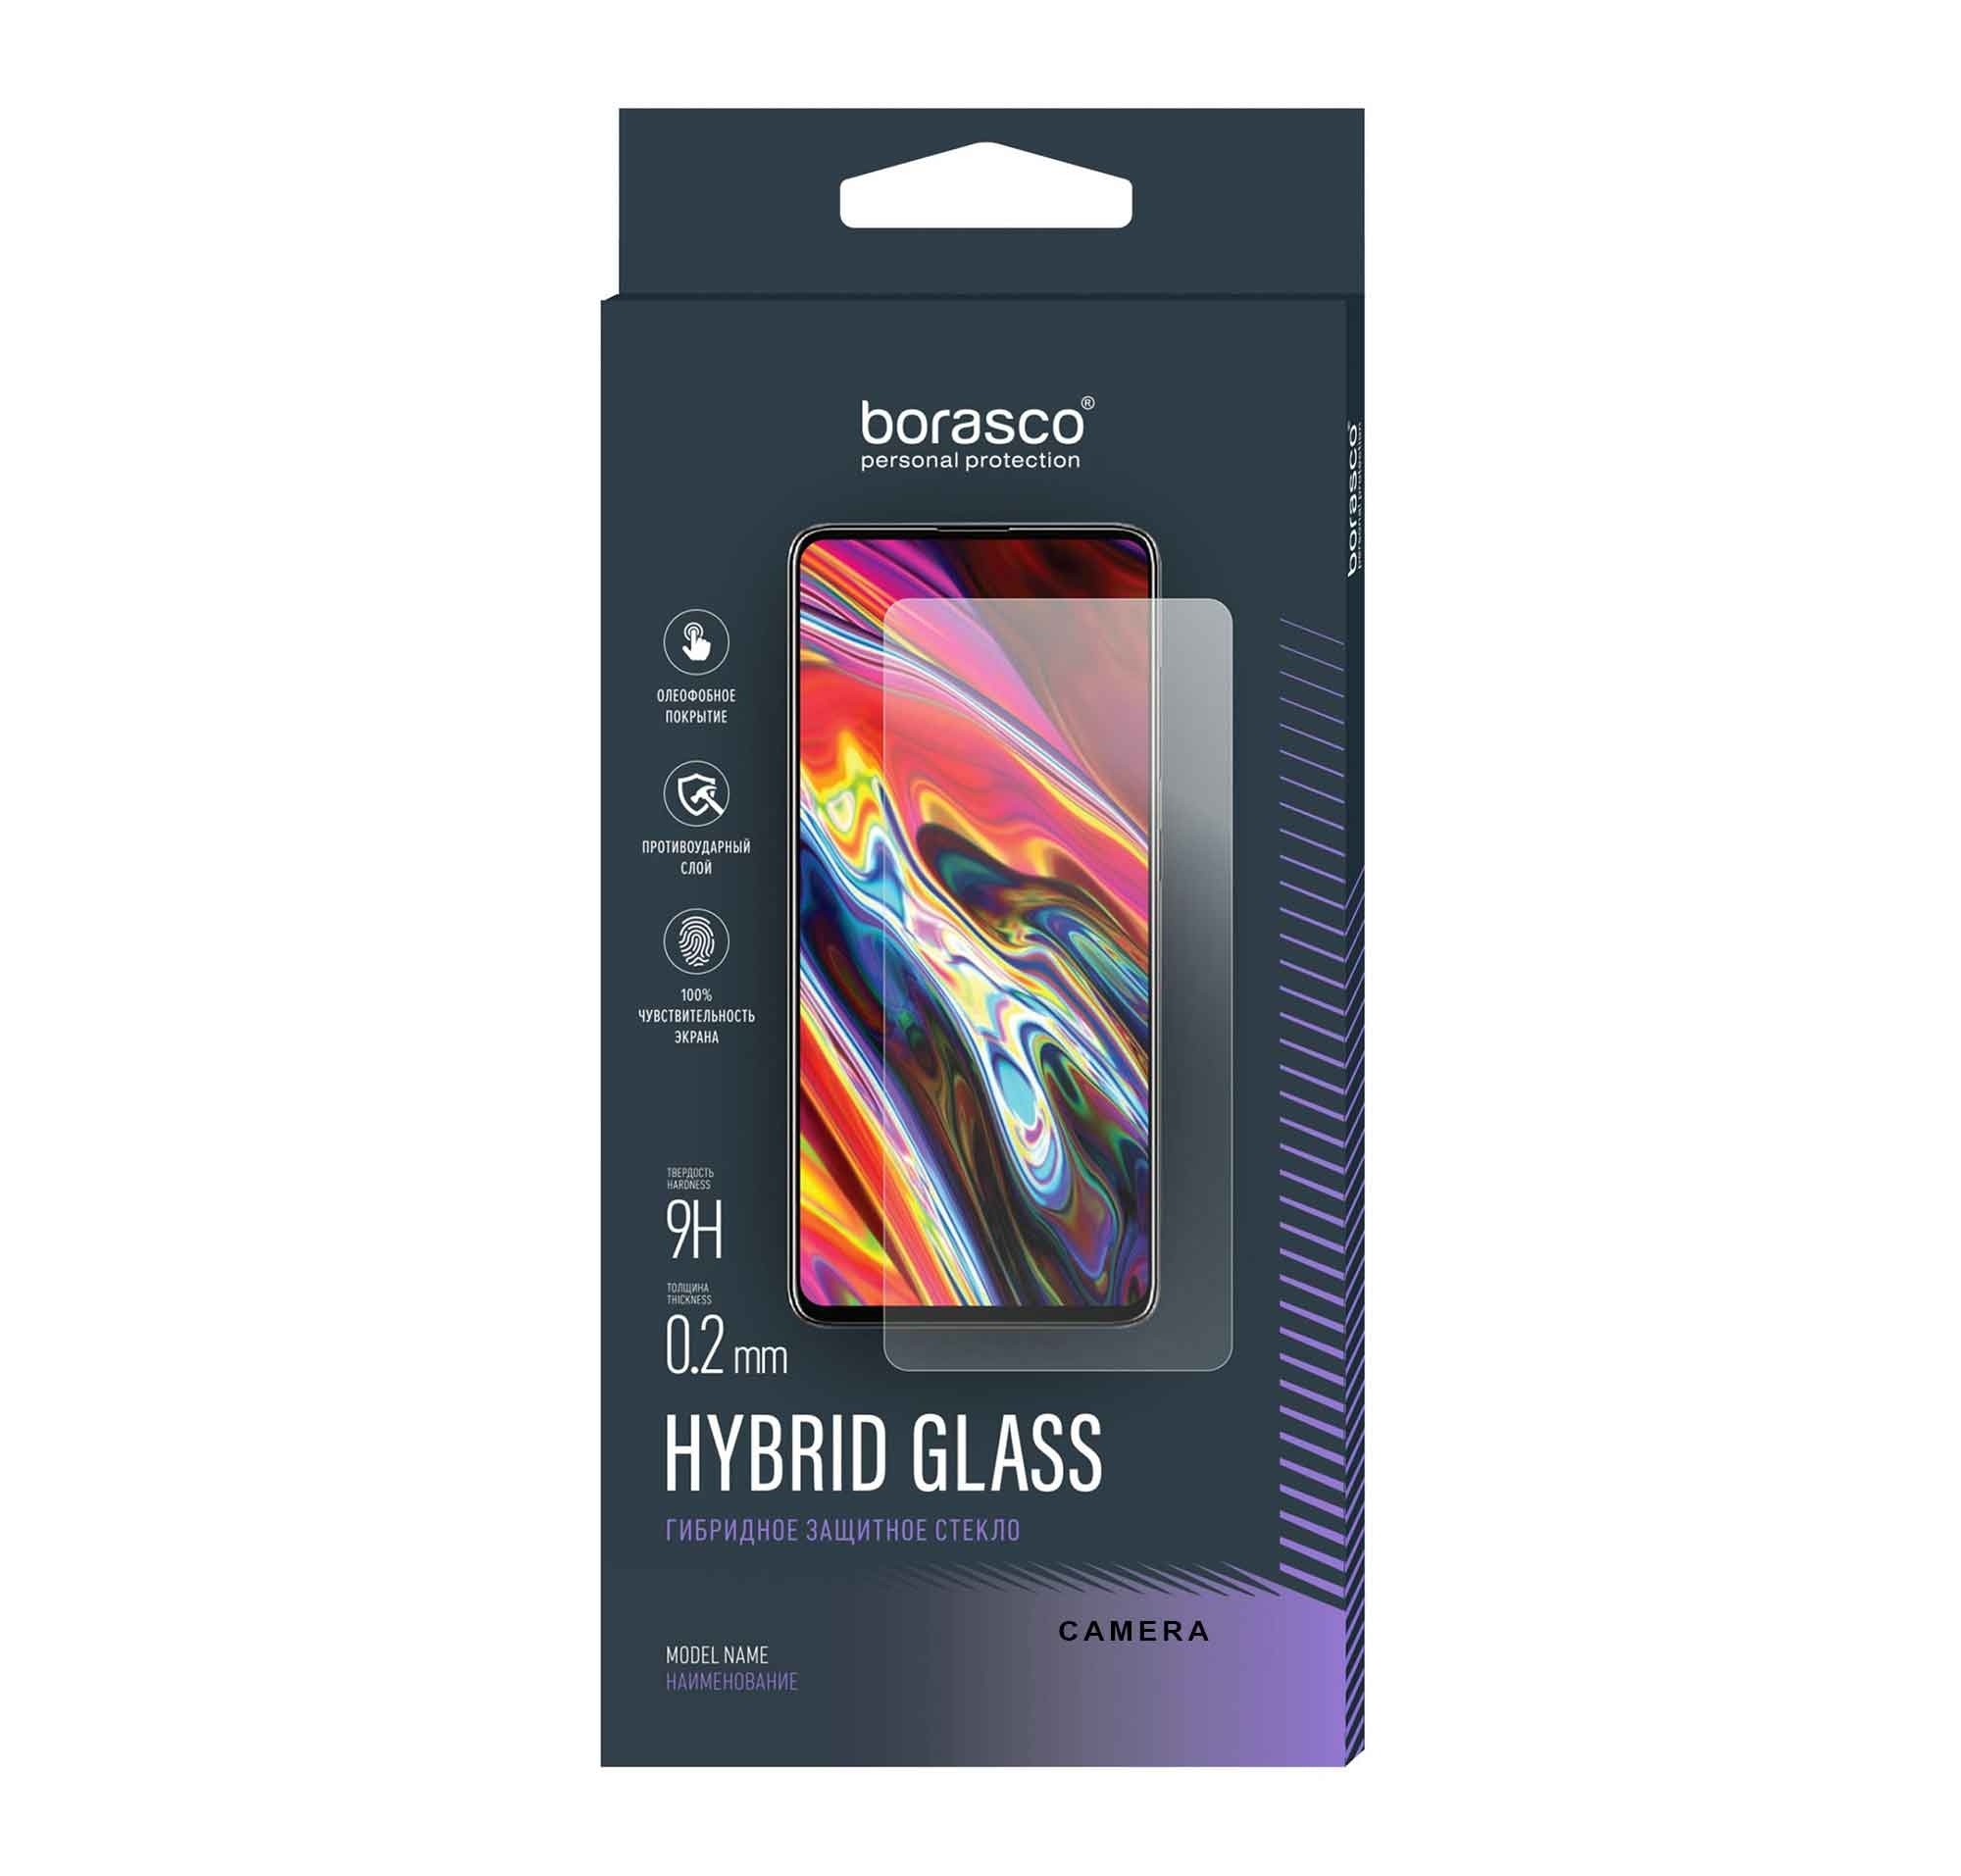 Защитное стекло (Экран+Камера) BoraSCO Hybrid Glass для ITEL Vision 3 Plus защитное стекло borasco 0 26 mm для itel vision 3